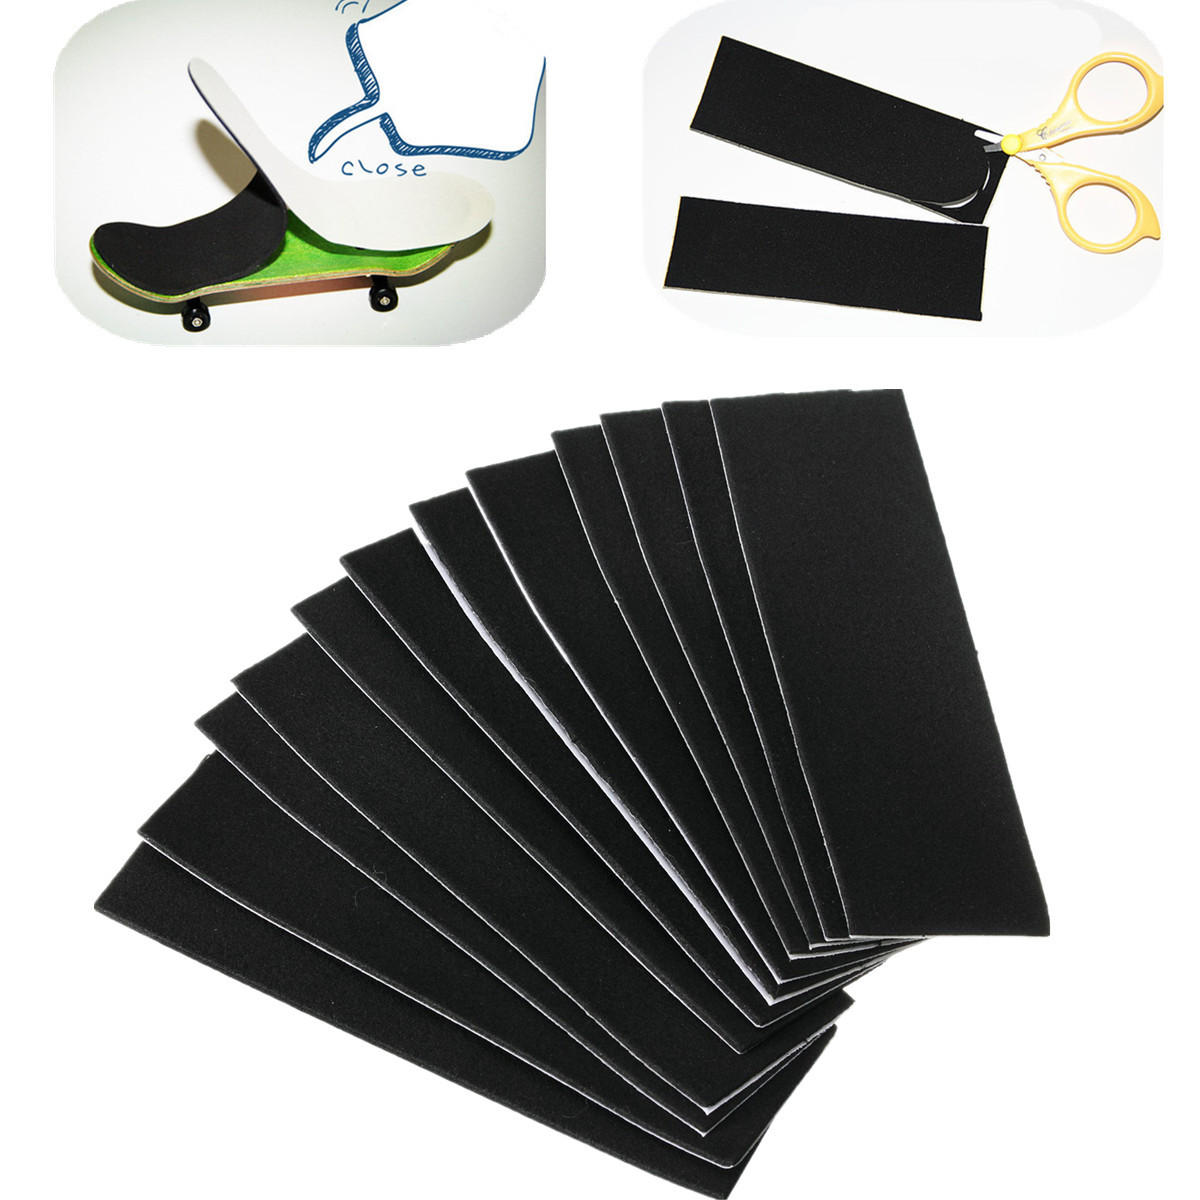 12st 110mm x 35mm zwarte houten toets skateboard schuim grip tape stickers